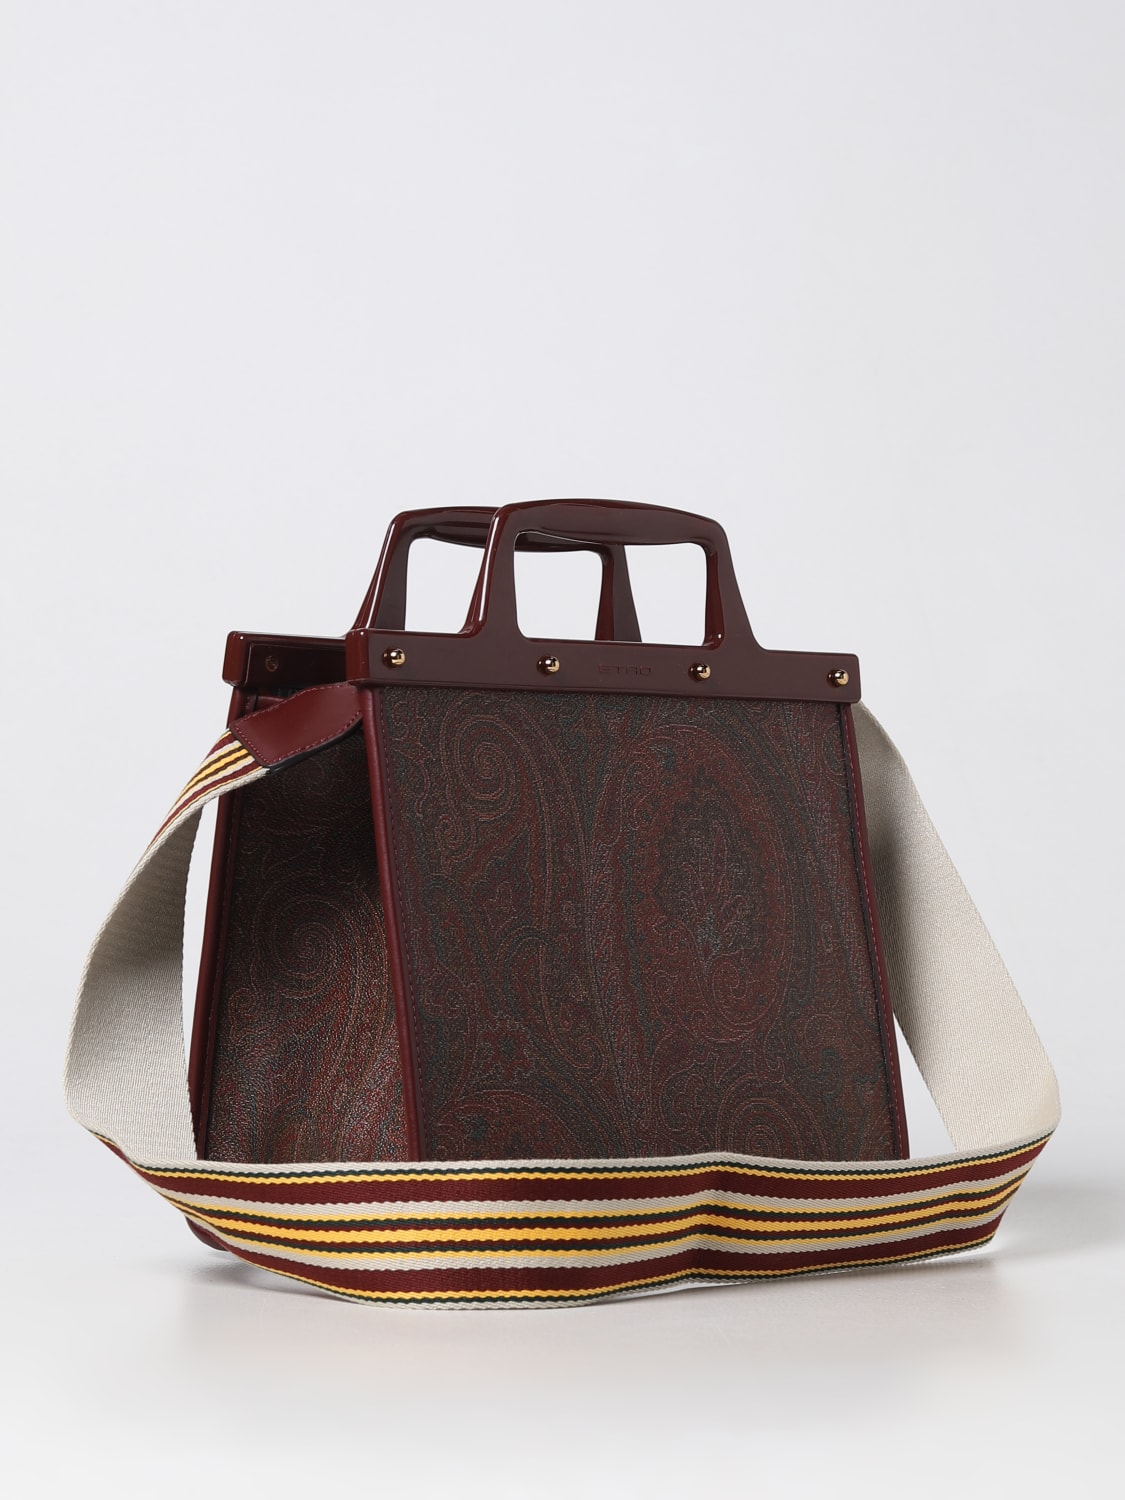 ETRO: Love Trotter bag in coated cotton - Brown | Etro handbag ...